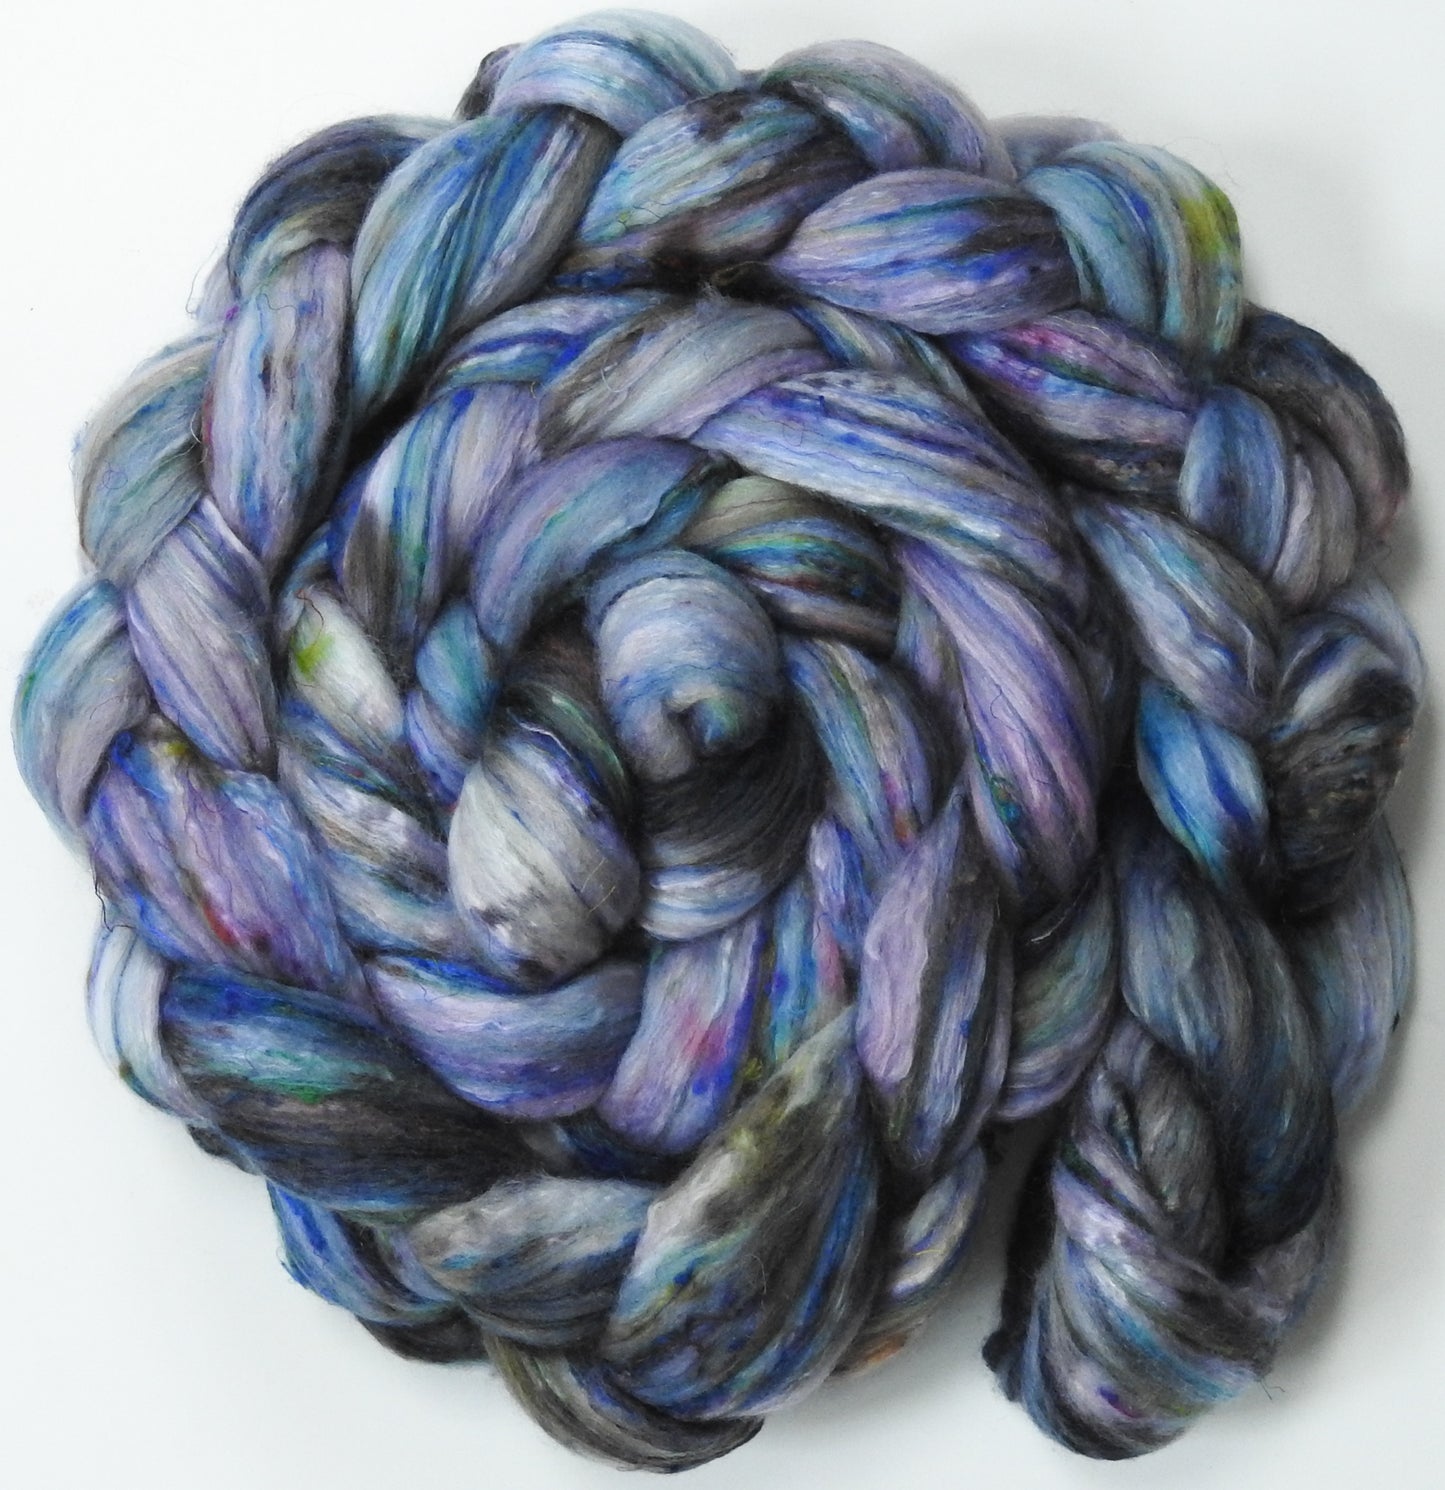 Vintage (5.5 oz) - Batt in a Braid #39ish - Falkland Merino/ Mulberry Silk / Sari Silk (60/25/15)